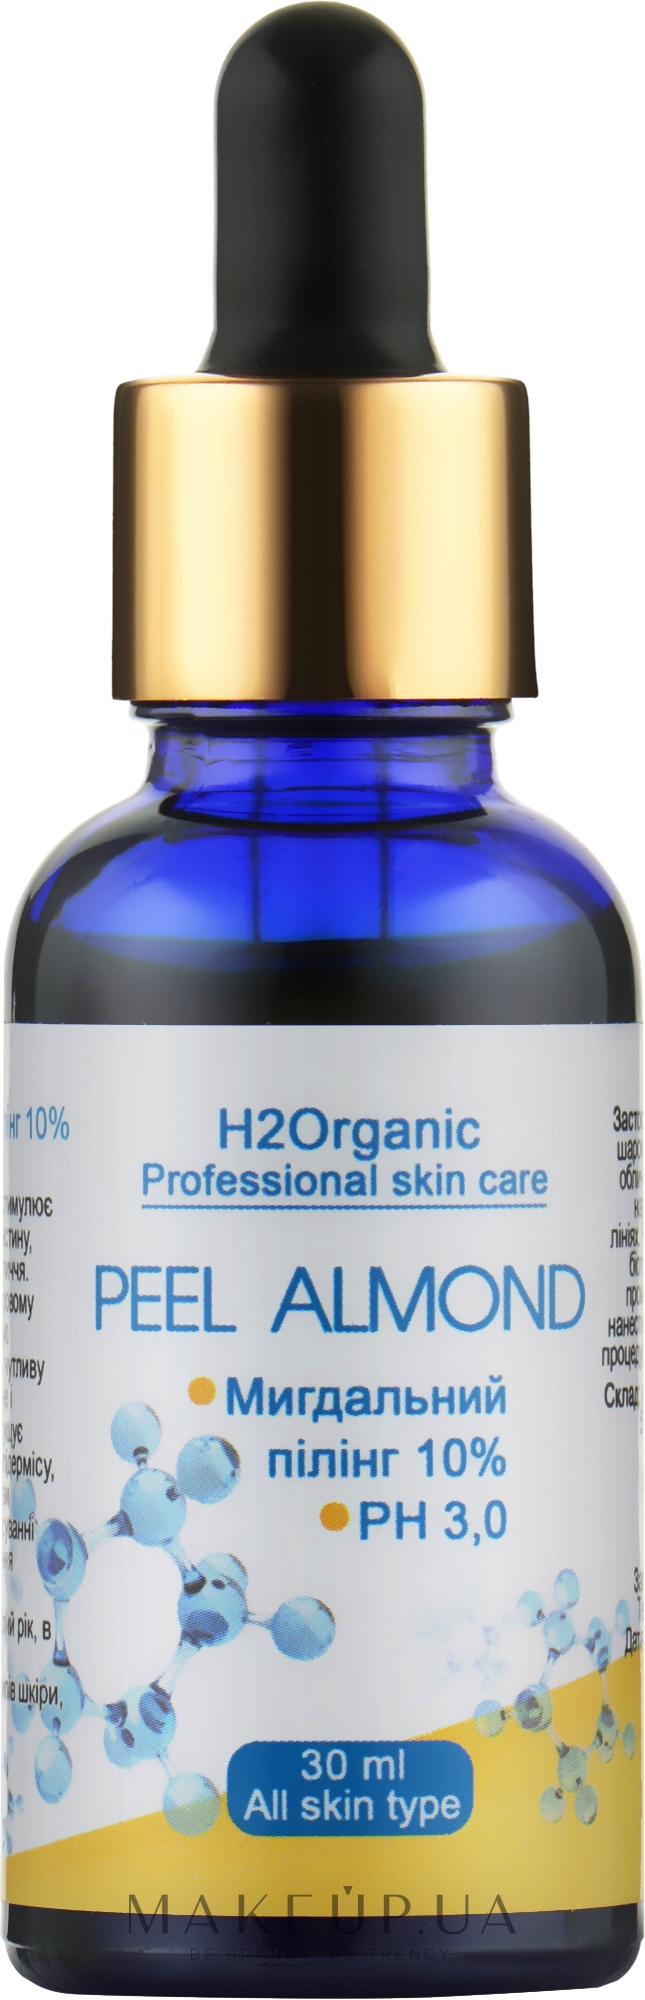 Пилинг "Миндальный" 10% - H2Organic Almond Peeling — фото 30ml